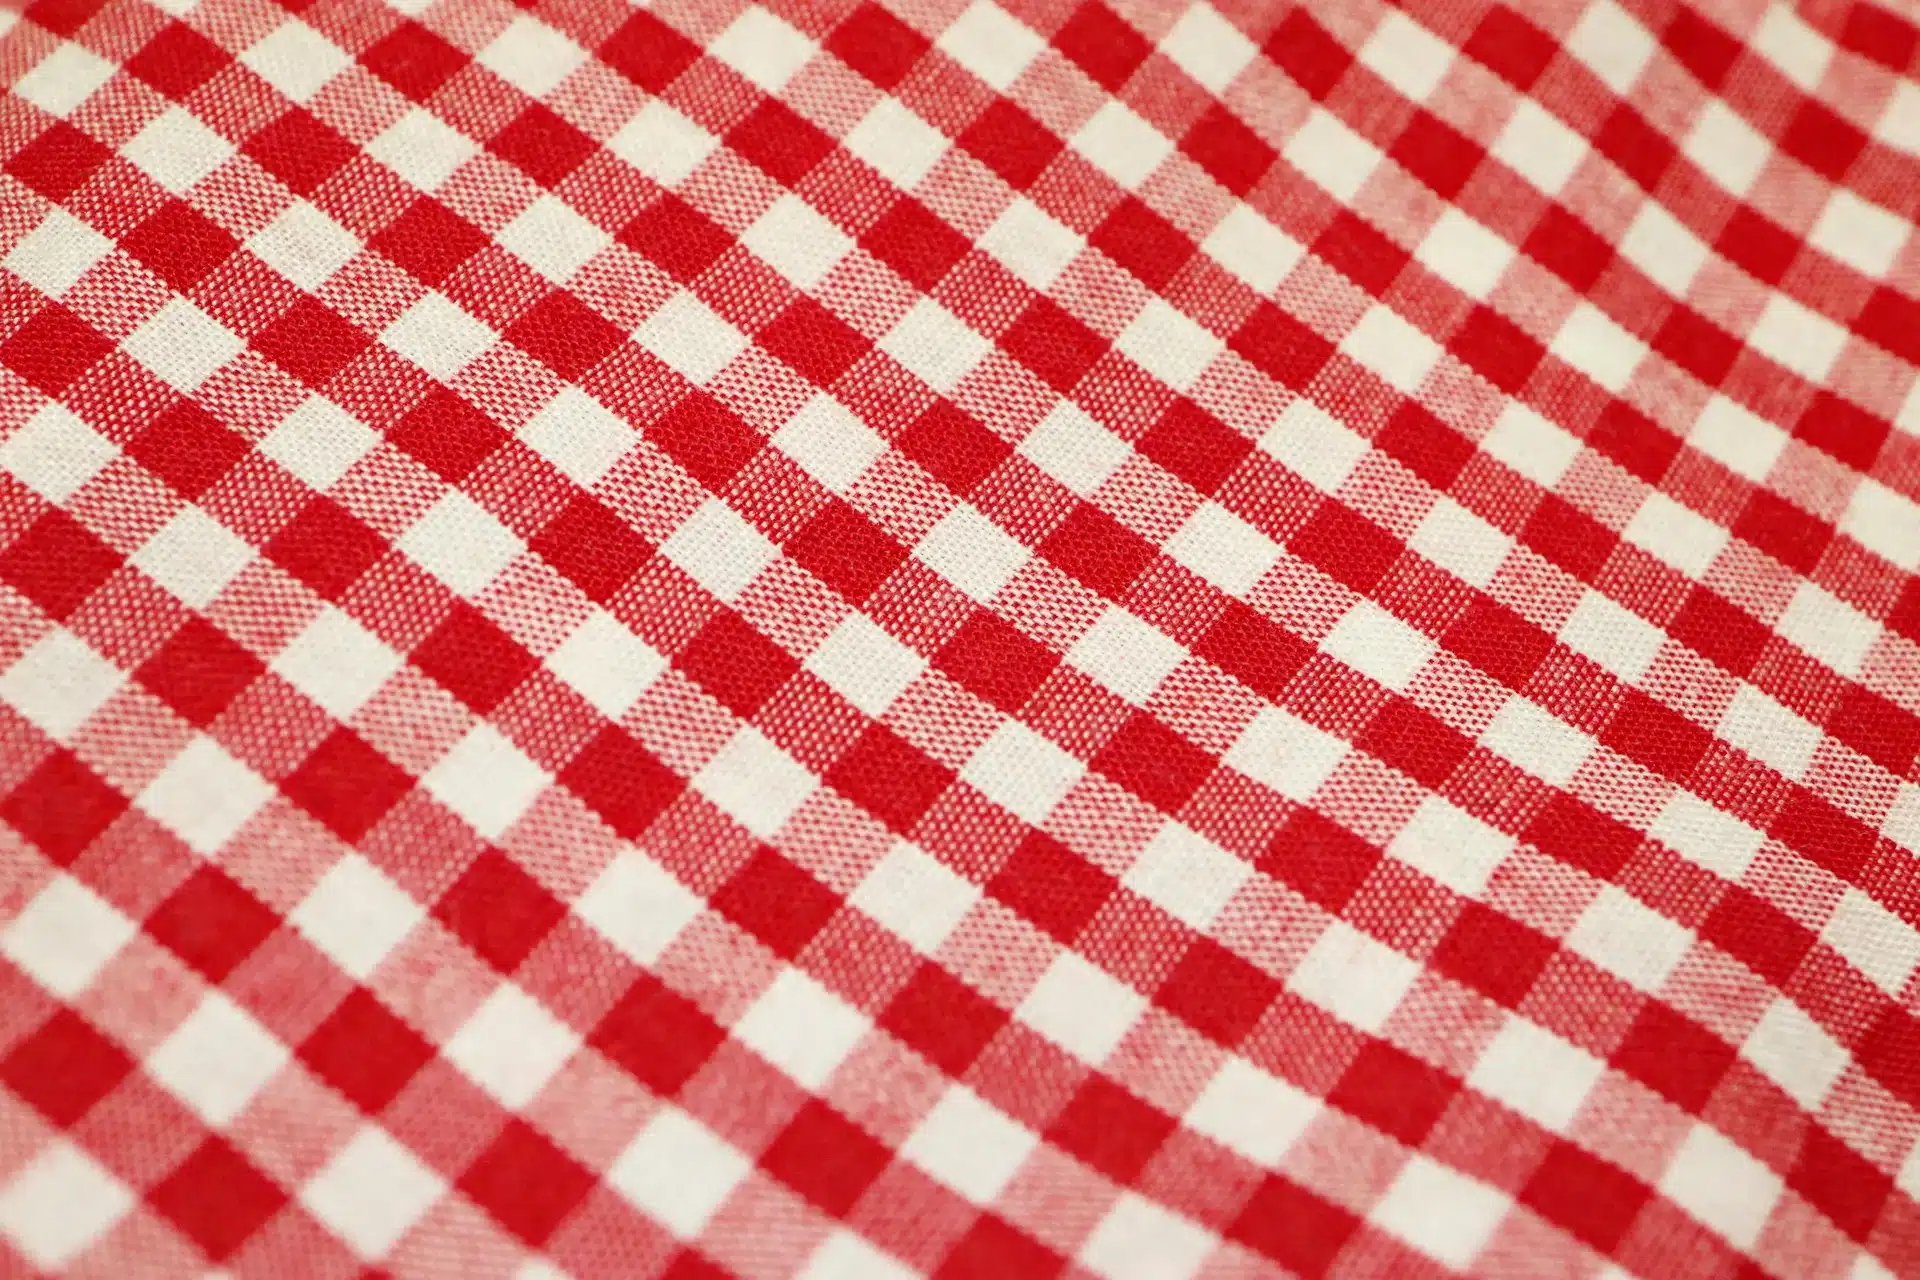 Dressmaking Fabrics - red and white chequer fabric